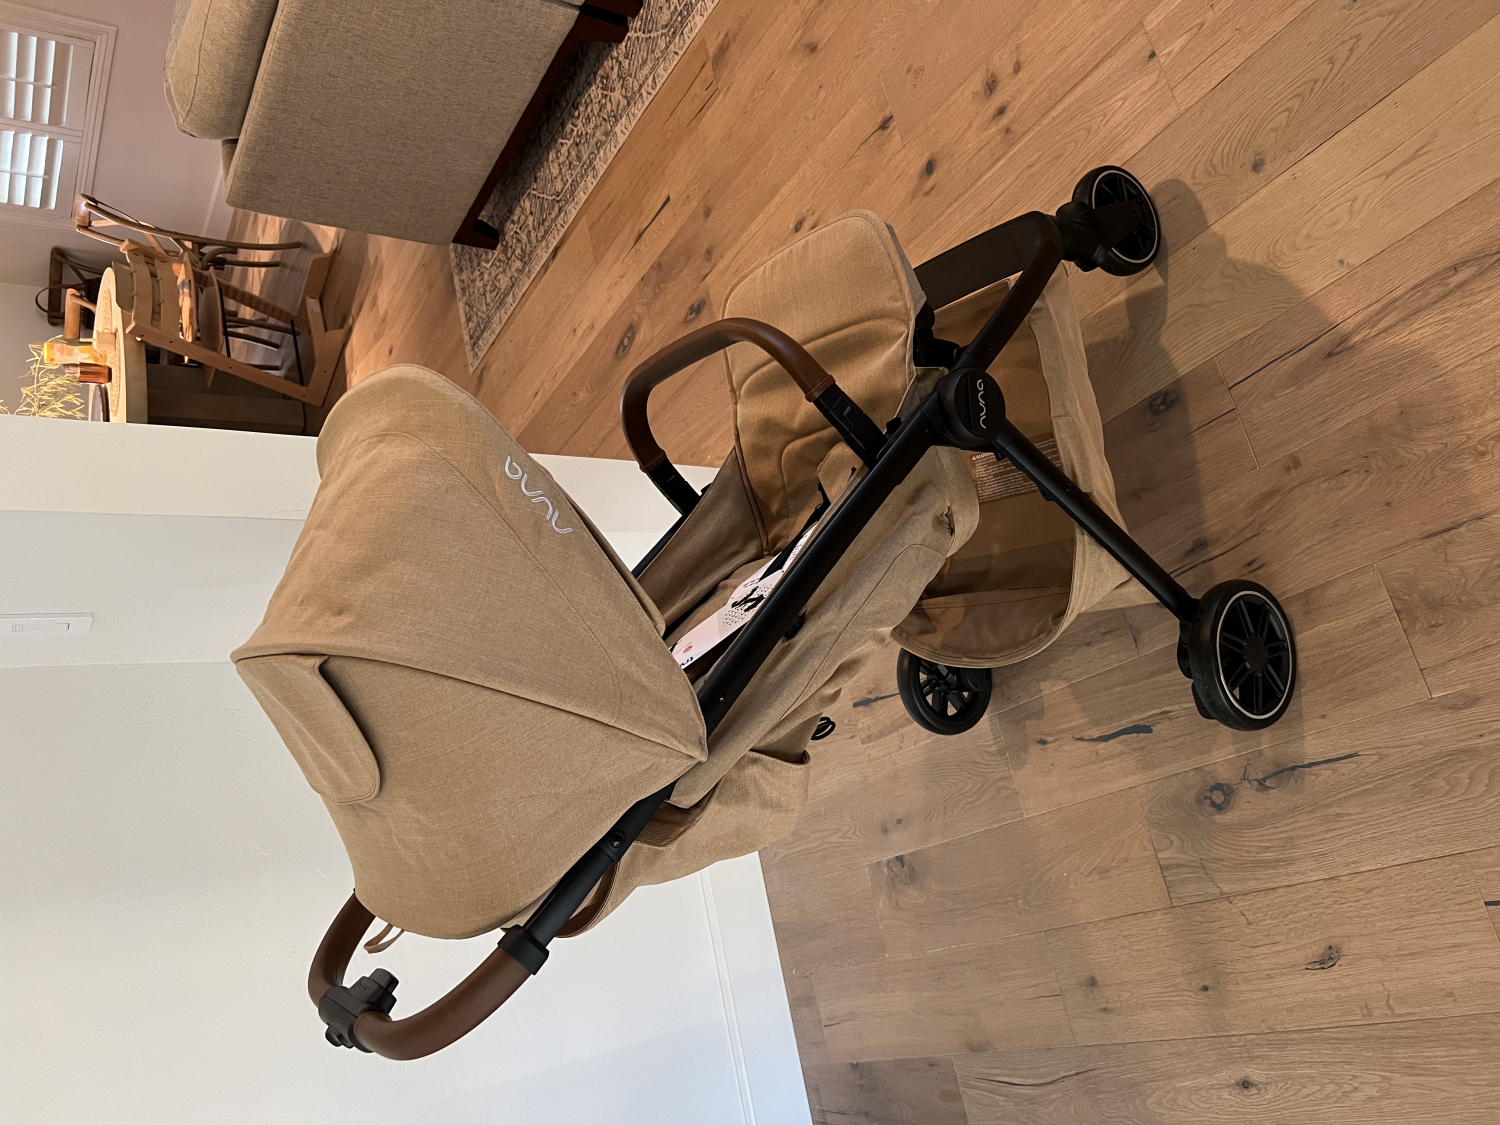 Nuna trvl LIght Brown Compact Lightweight Travel Baby Stroller +